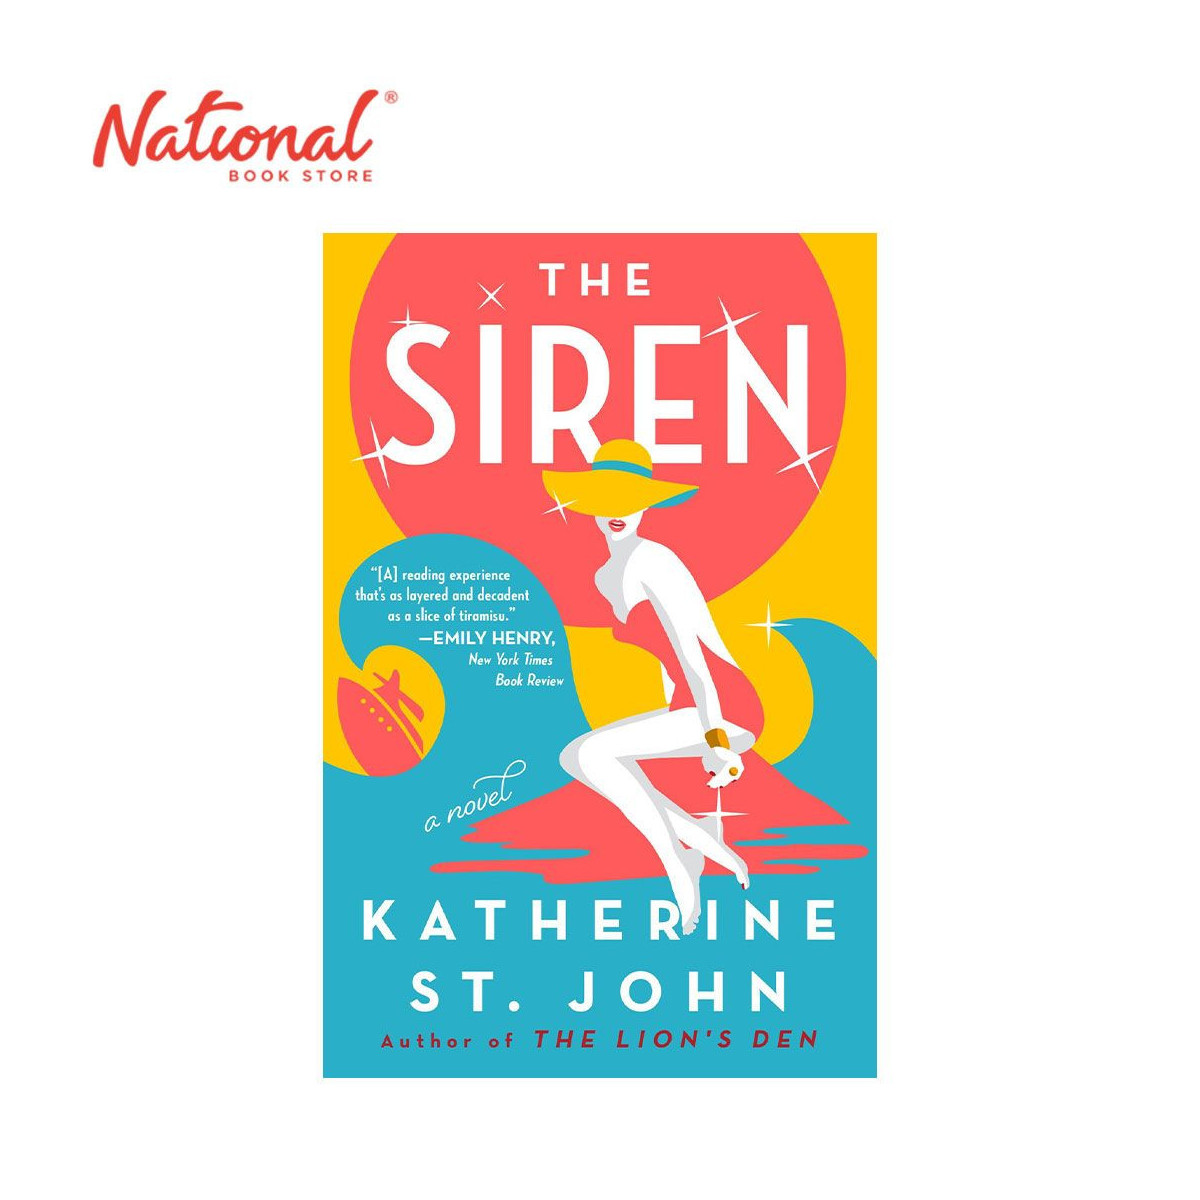 The Siren by Katherine St. John - Trade Paperback - Thriller, Mystery & Suspense